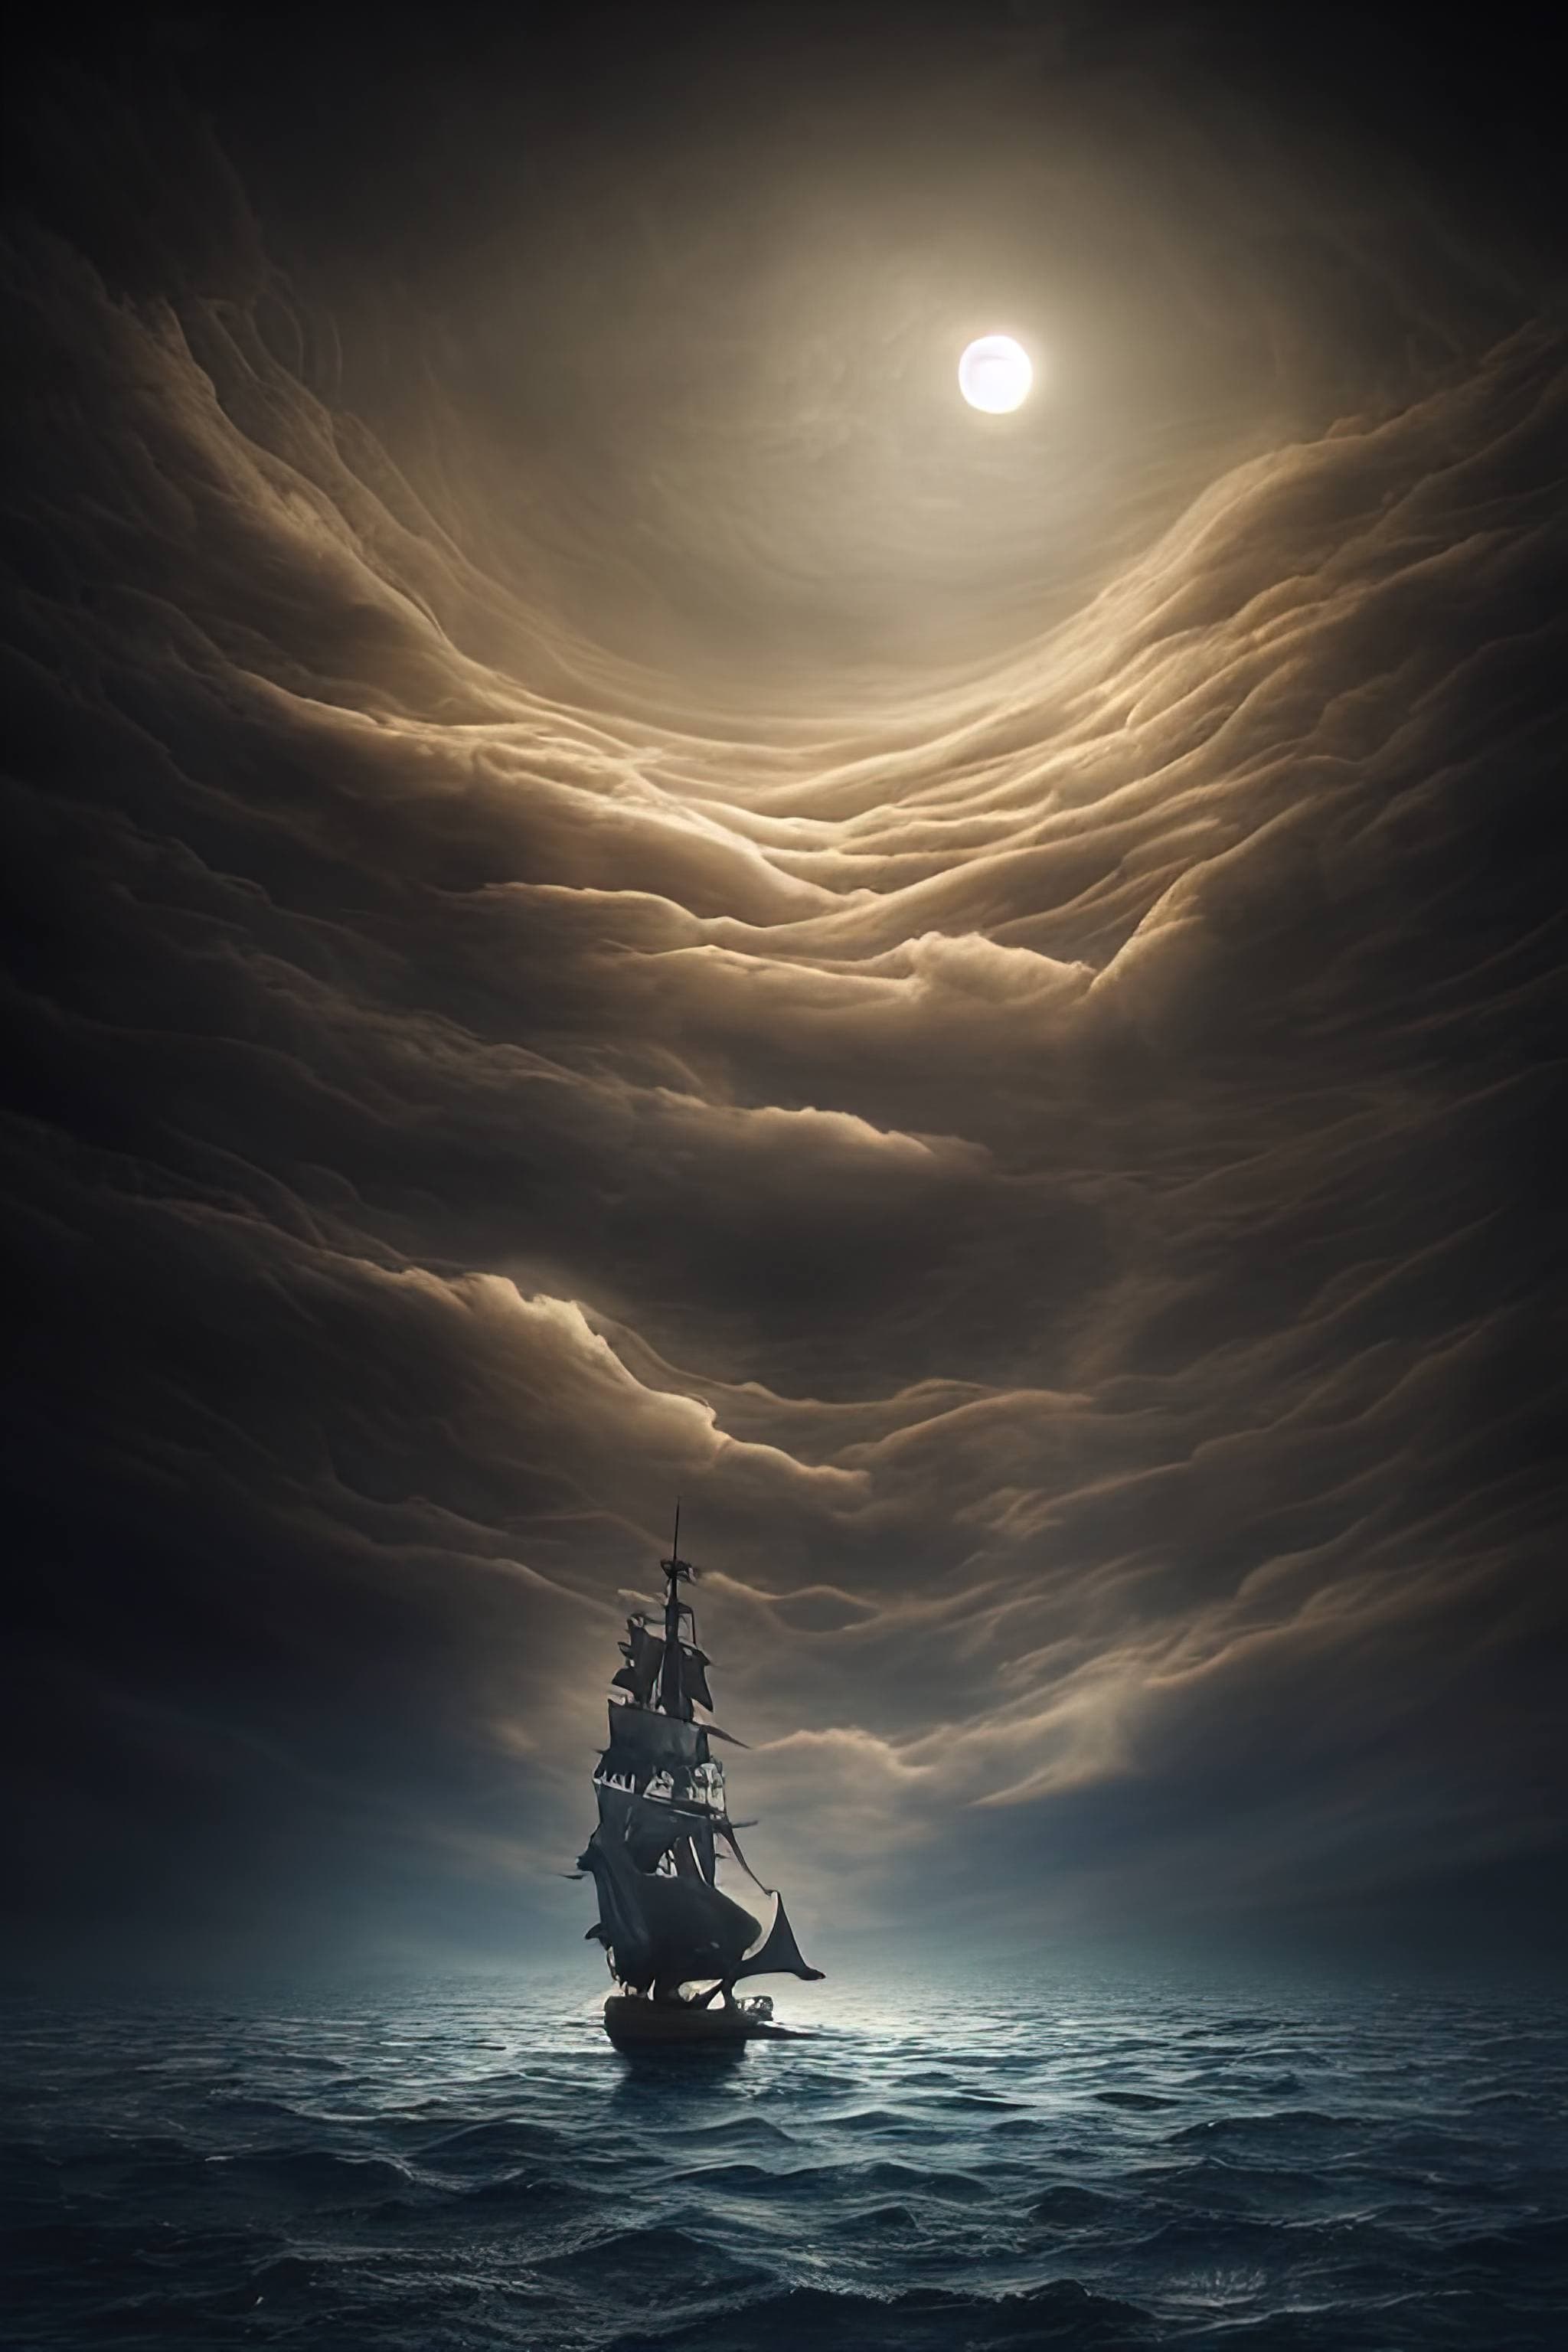 The moonlight illuminates a stunning scene of a pirate ship